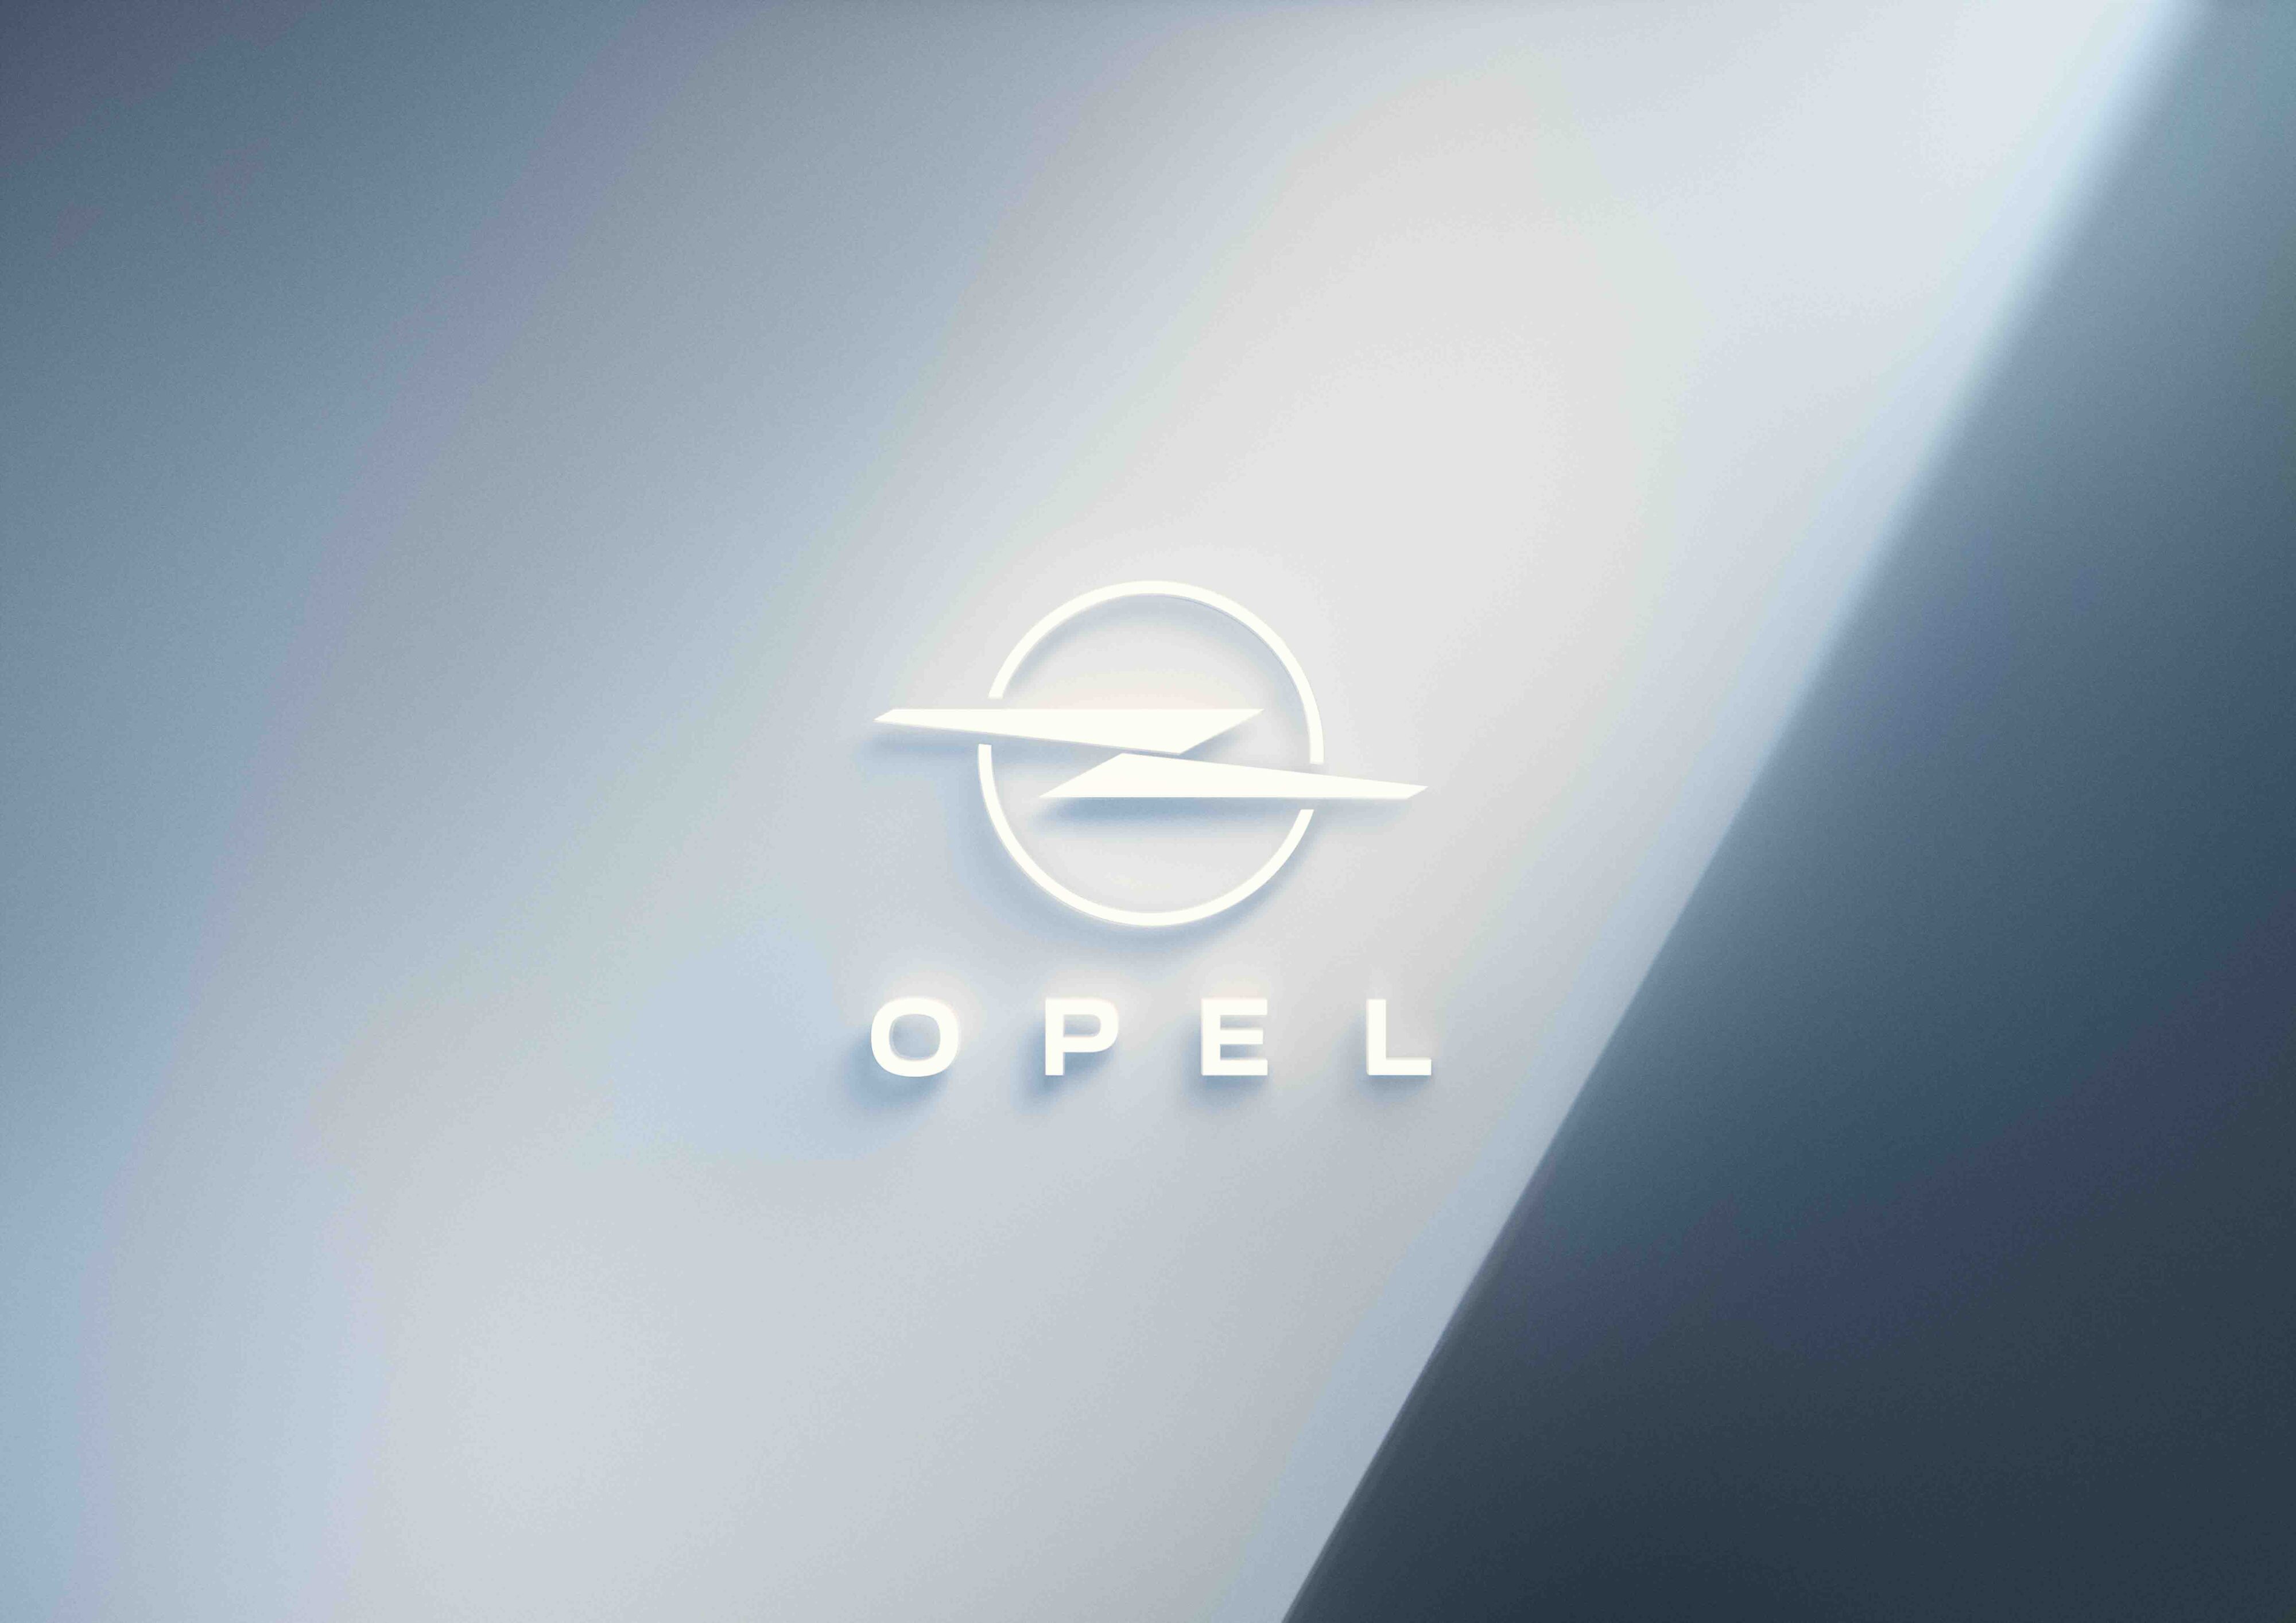 The new electrified Opel Blitz logo